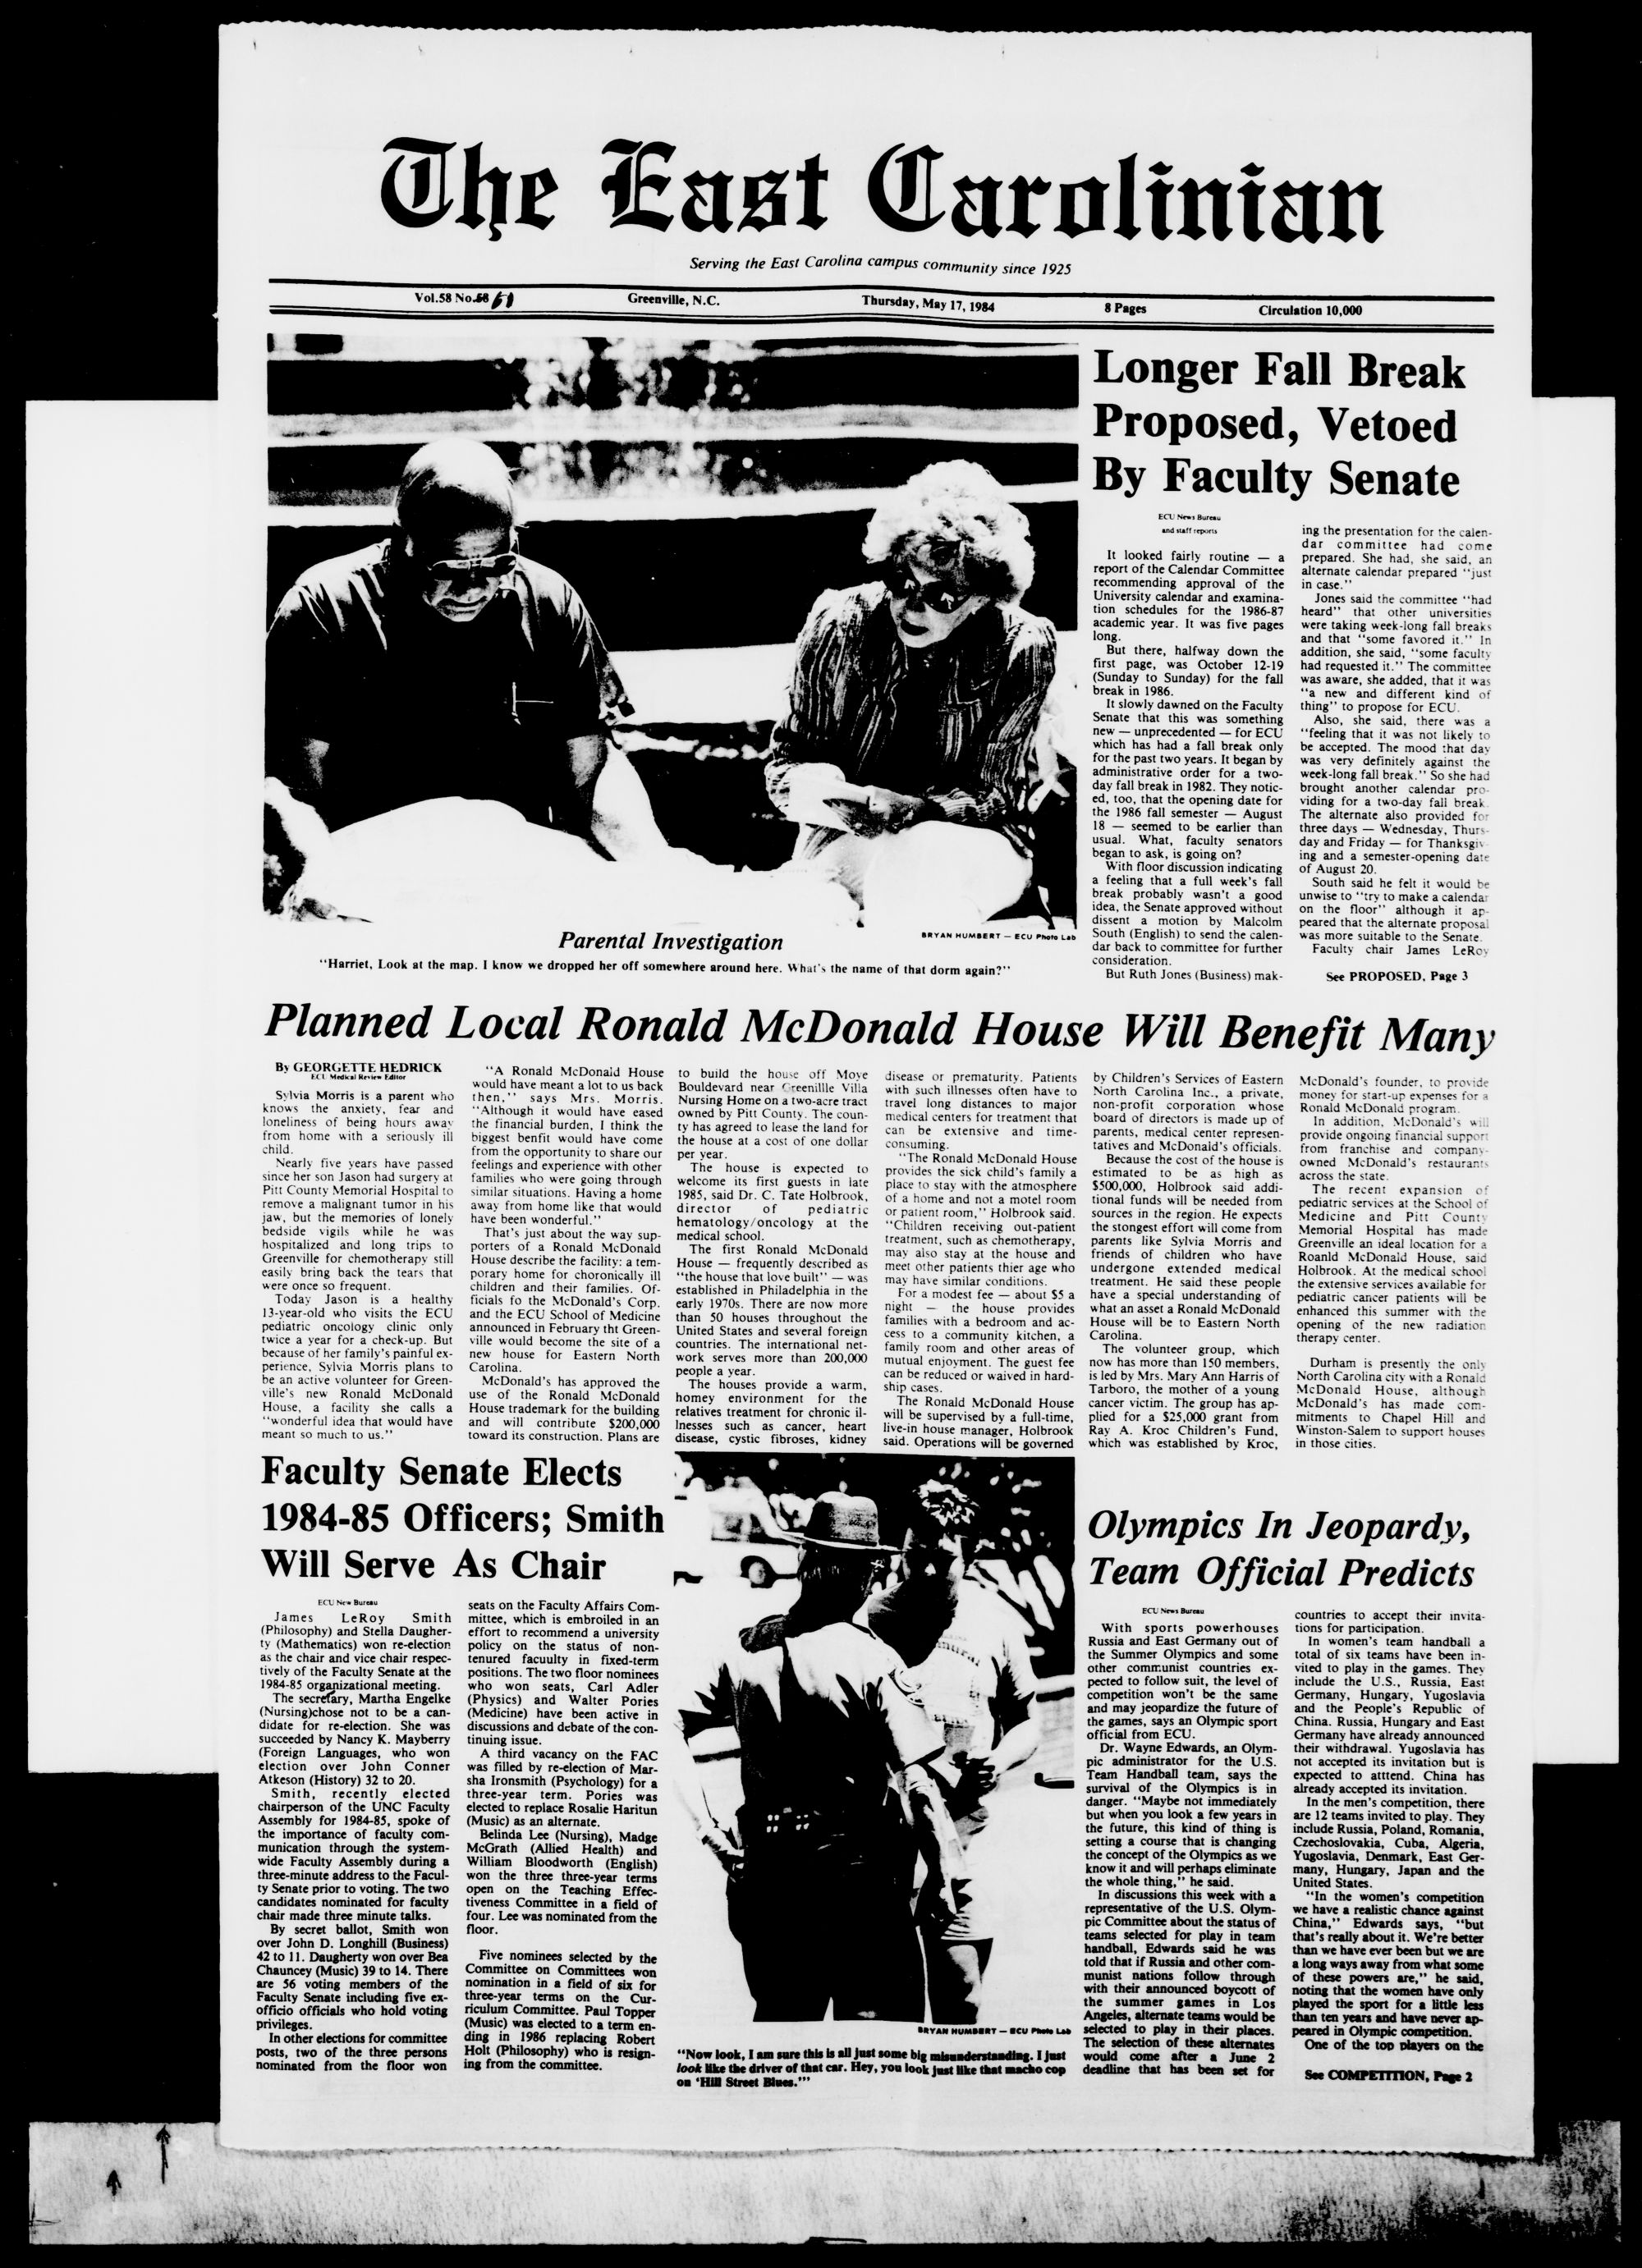 The East Carolinian, May 17, 1984 image